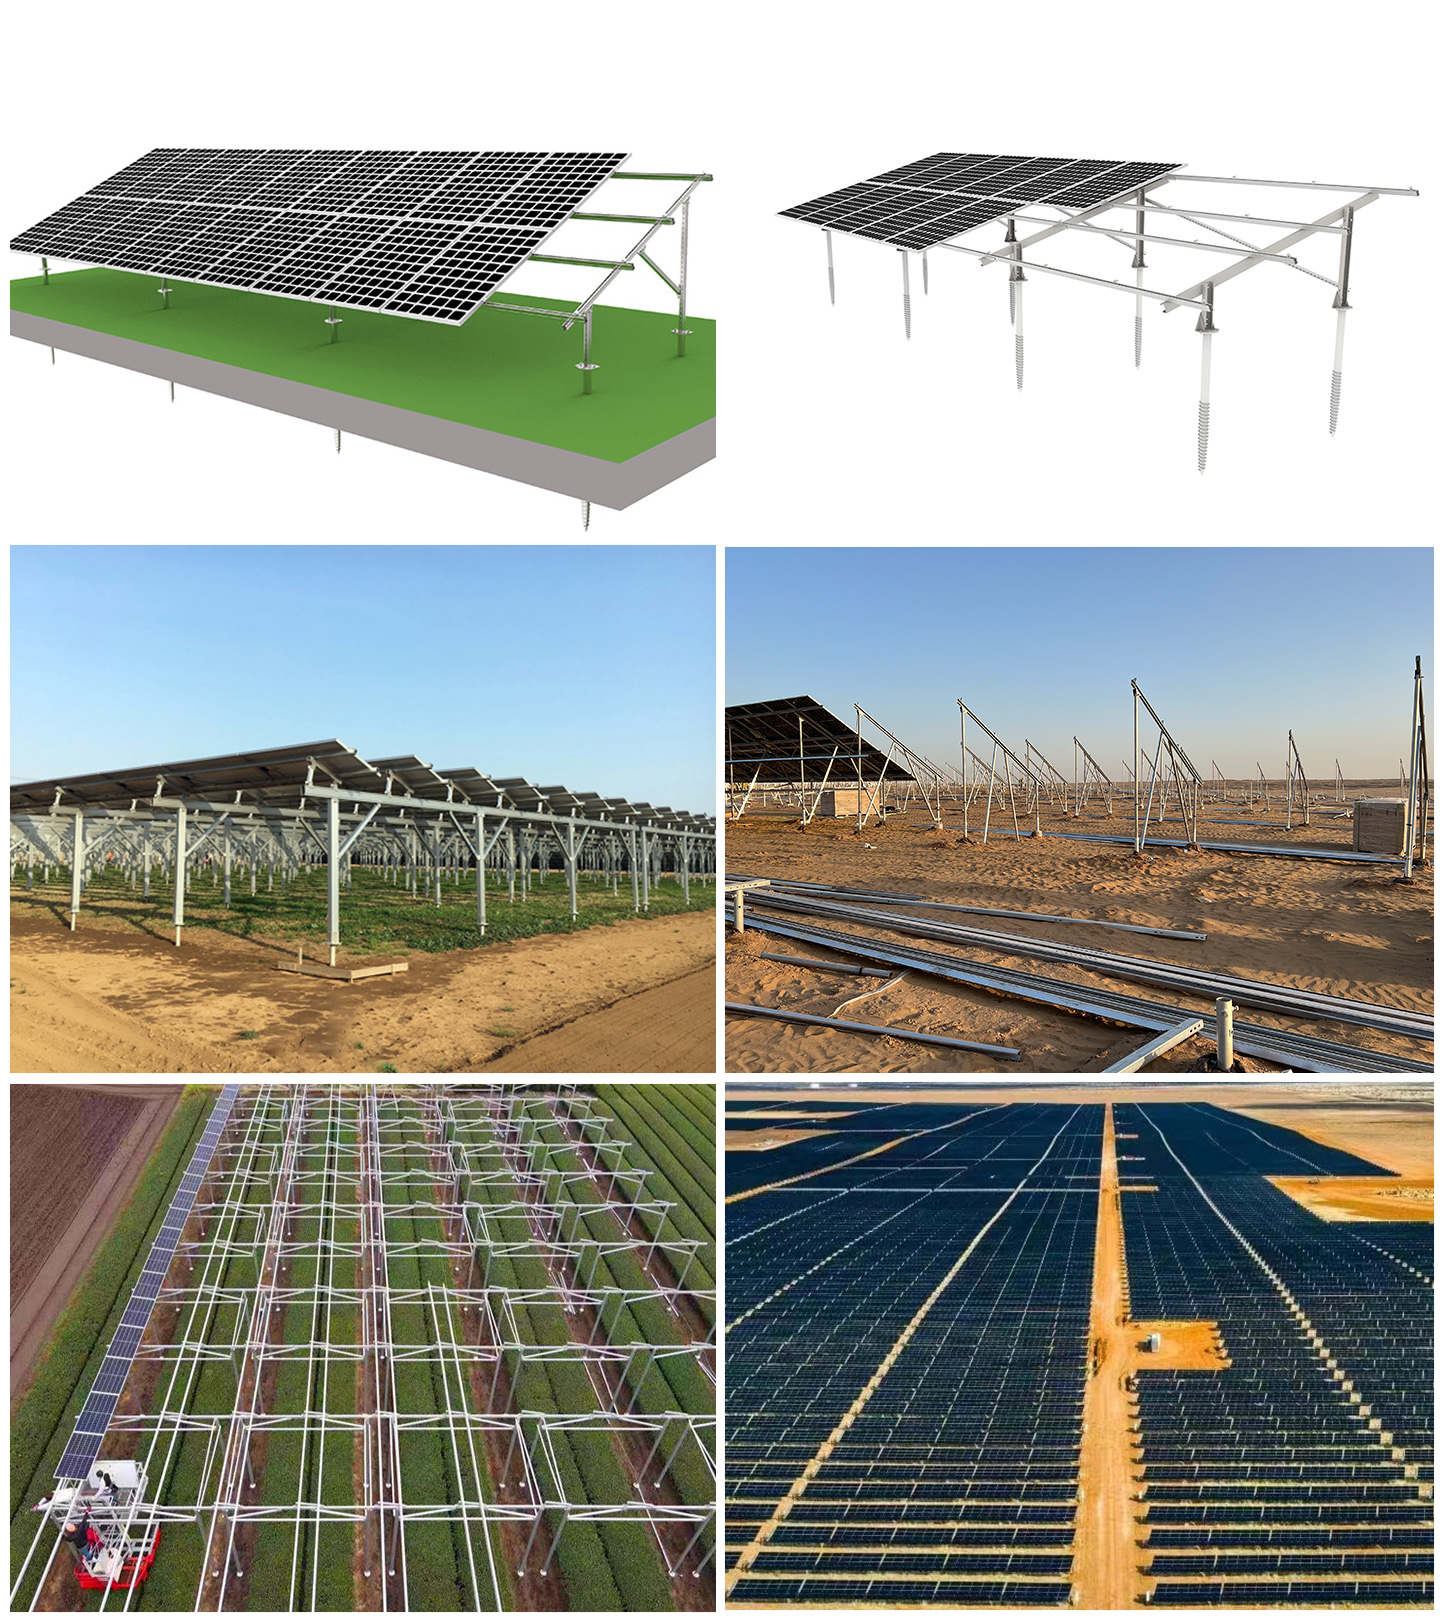 Montaje solar en suelo